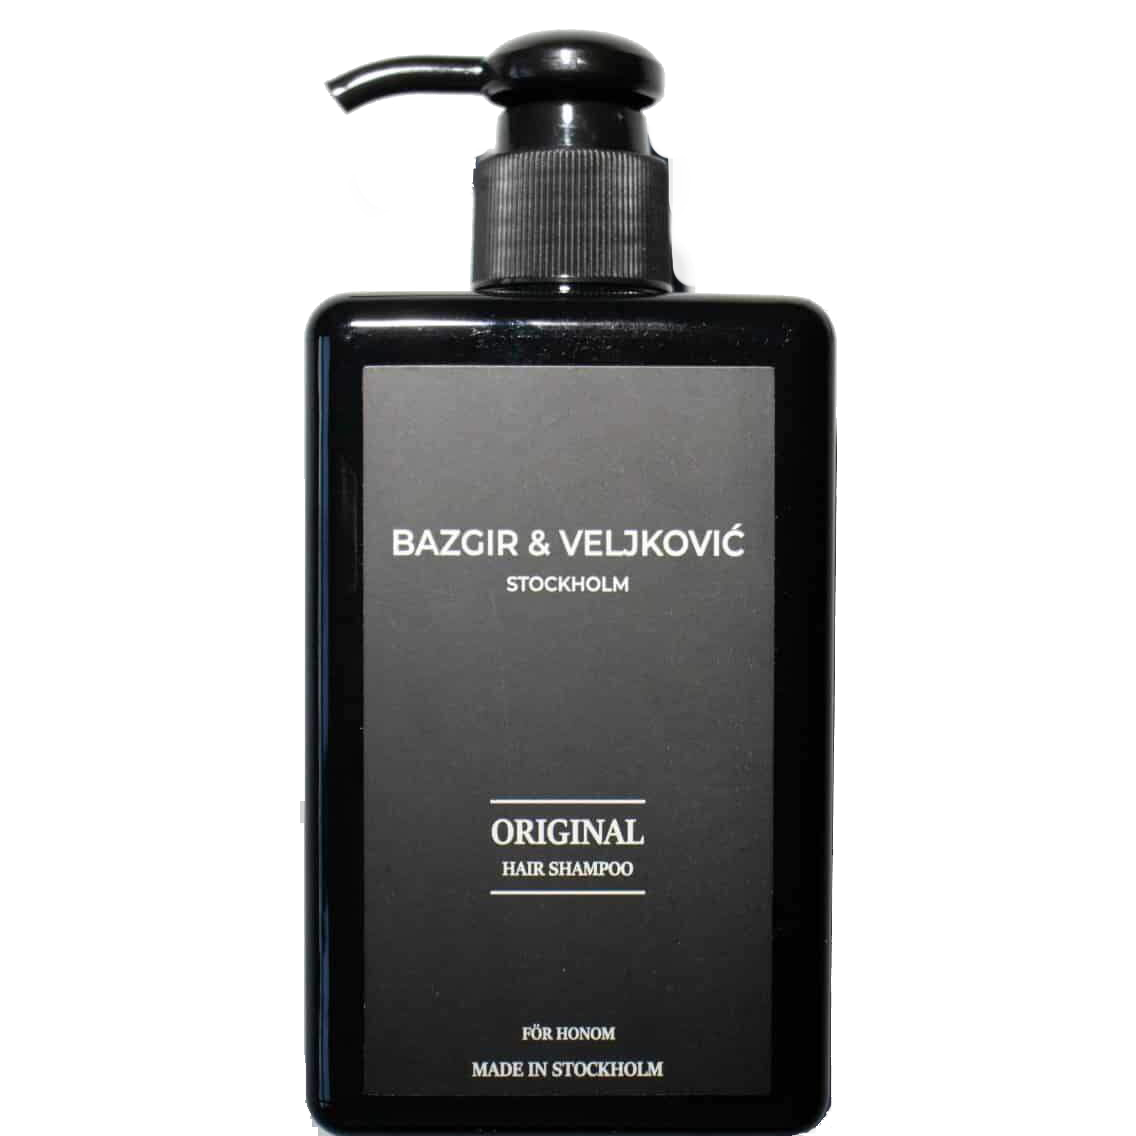 Bazgir & Veljkovic Hair Shampoo Giovanni 300 ml